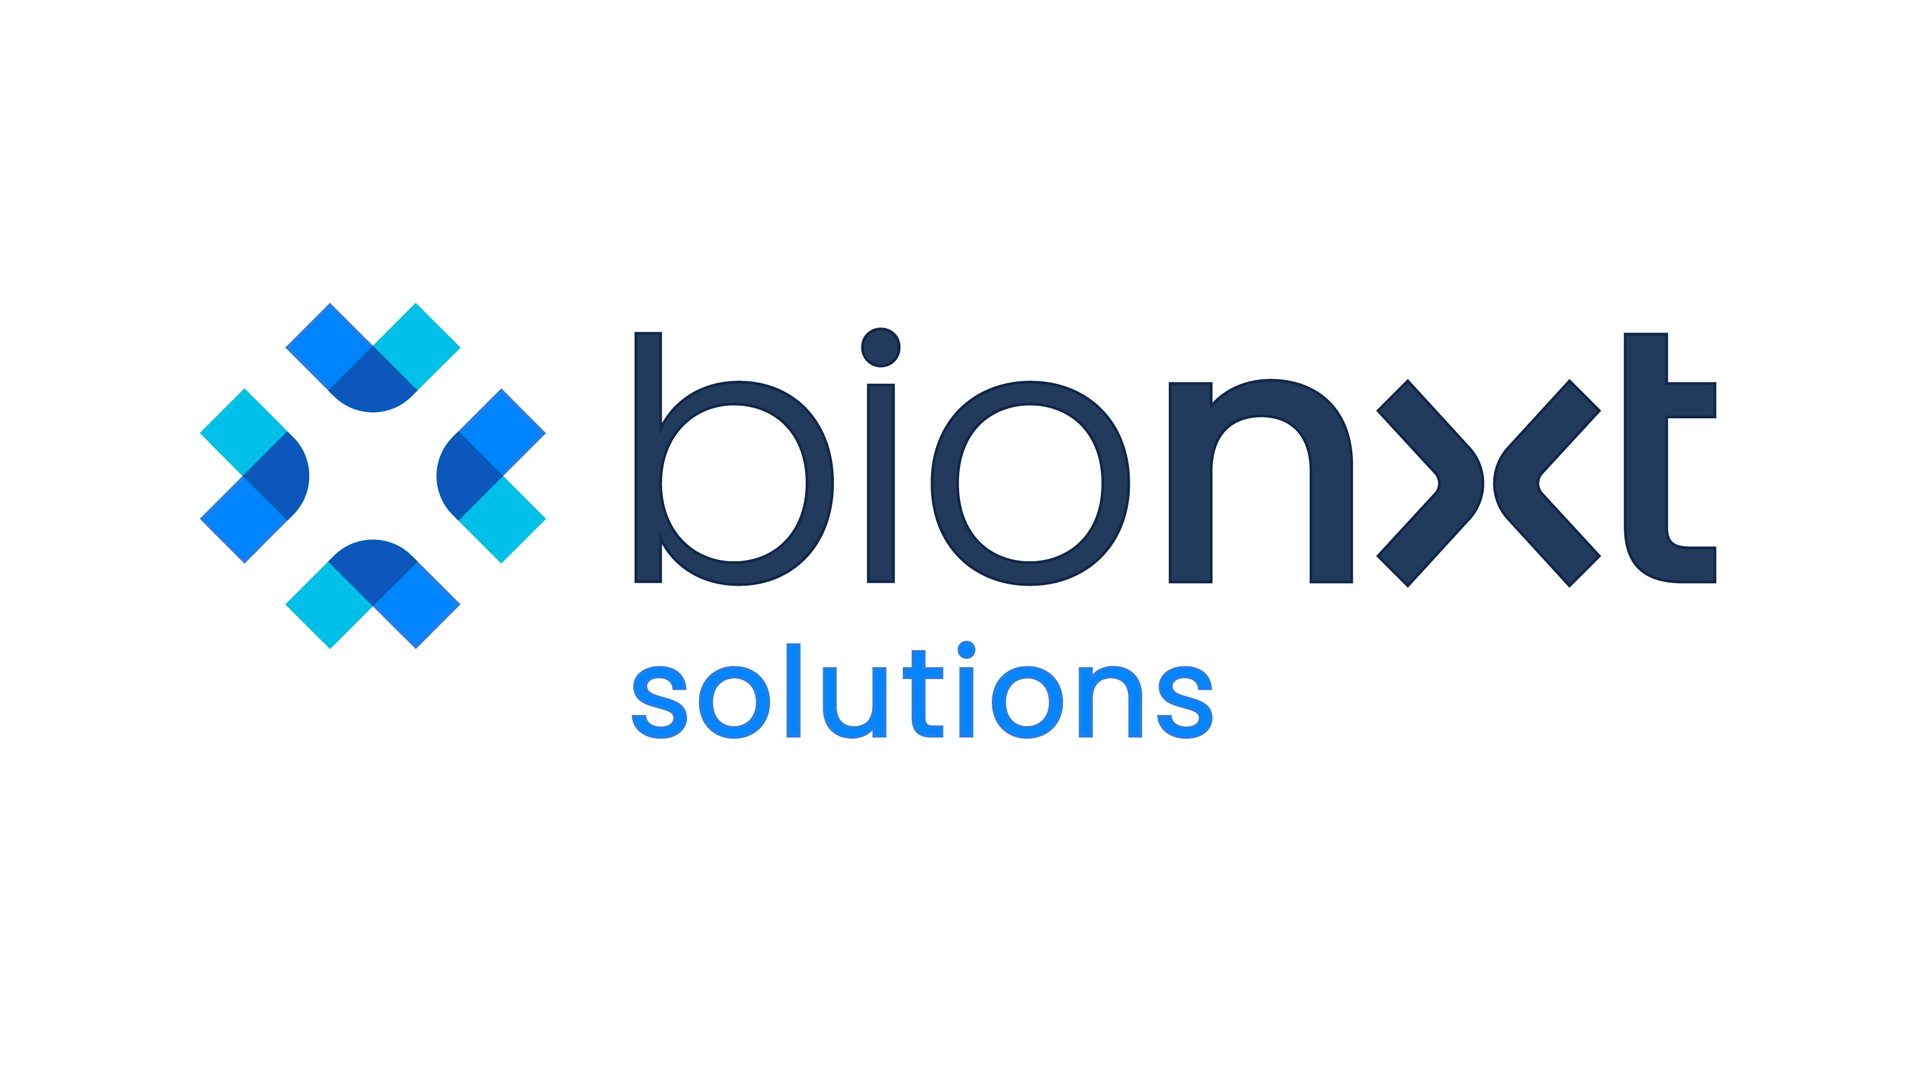 Bionxt solutions